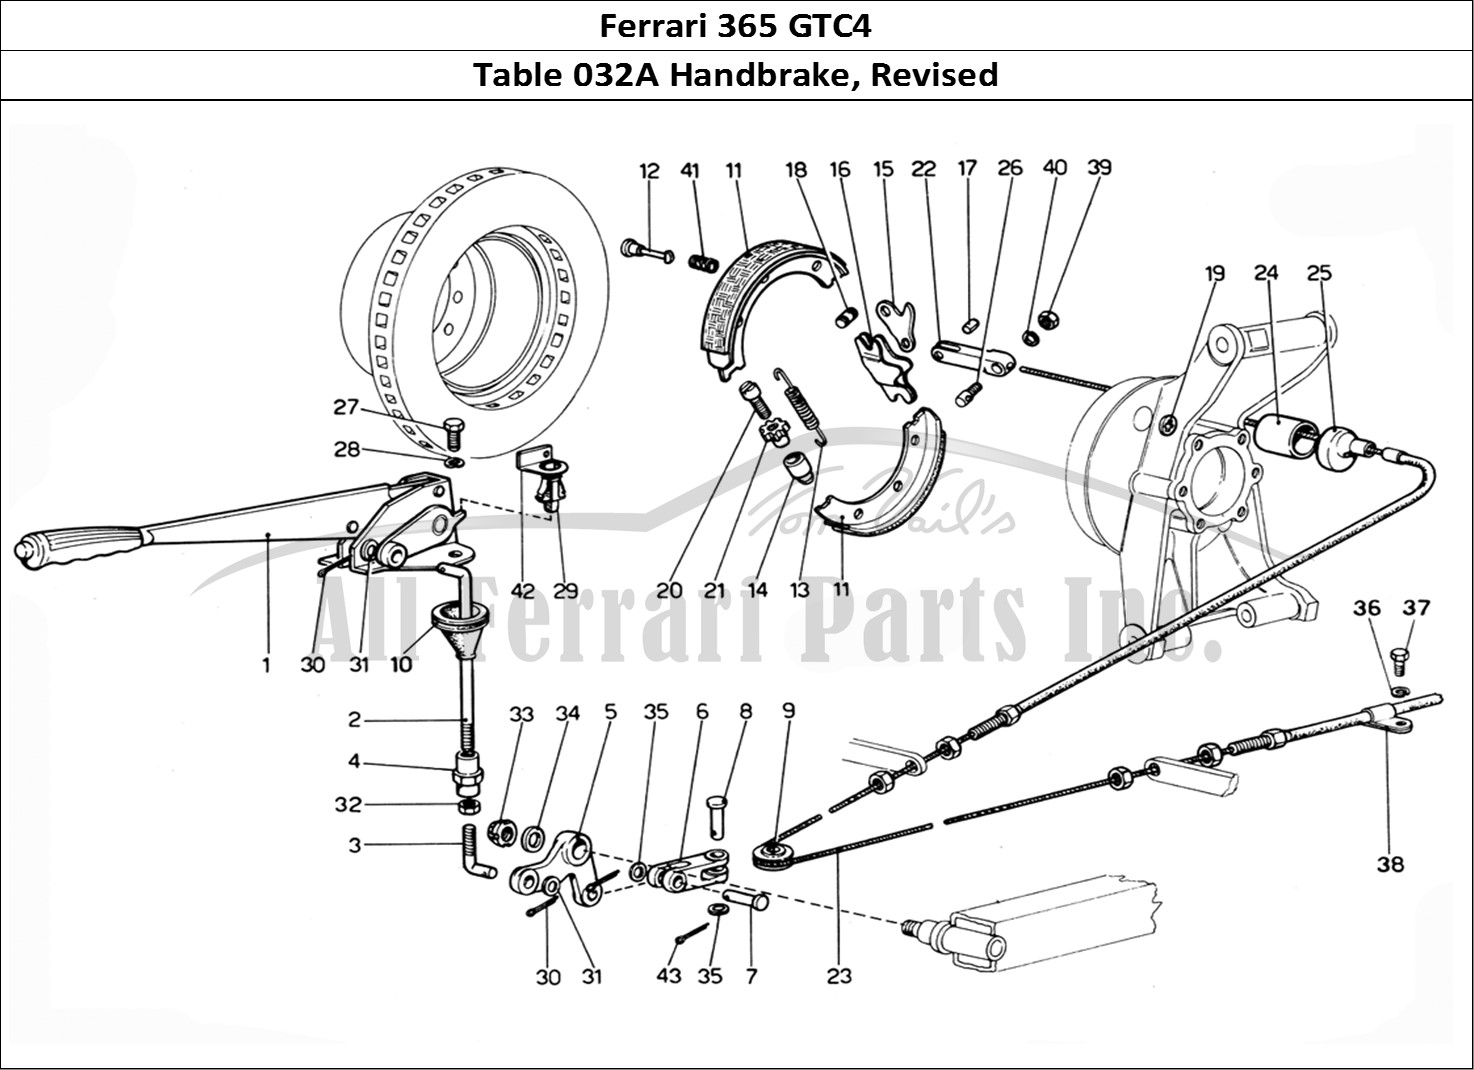 Ferrari Parts Ferrari 365 GTC4 (Mechanical) Page 032 Hand Brake - Revision